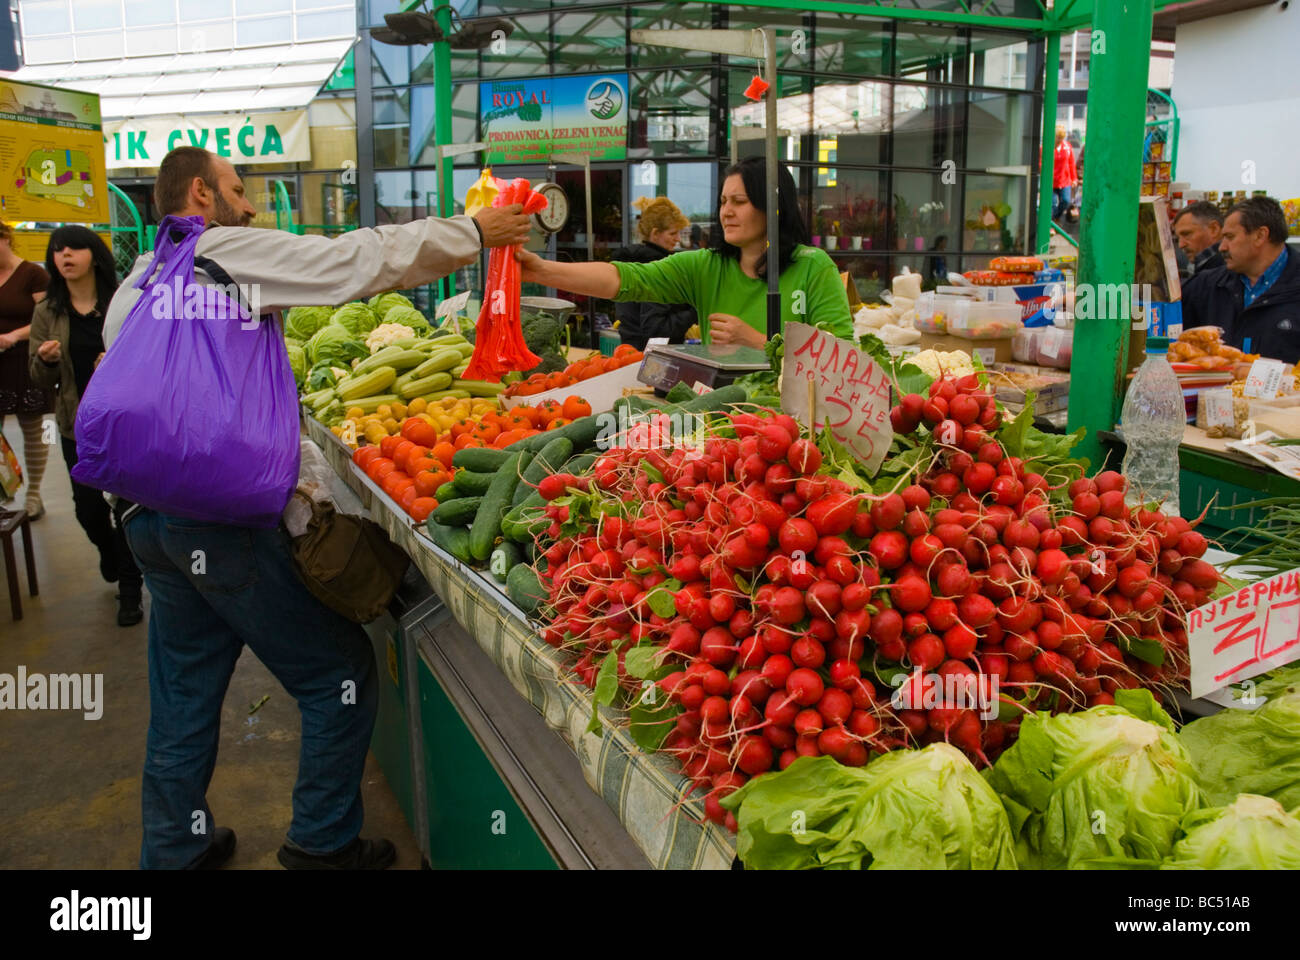 Zeleni venac the fresh produce market in central Belgrade Serbia Europe Stock Photo